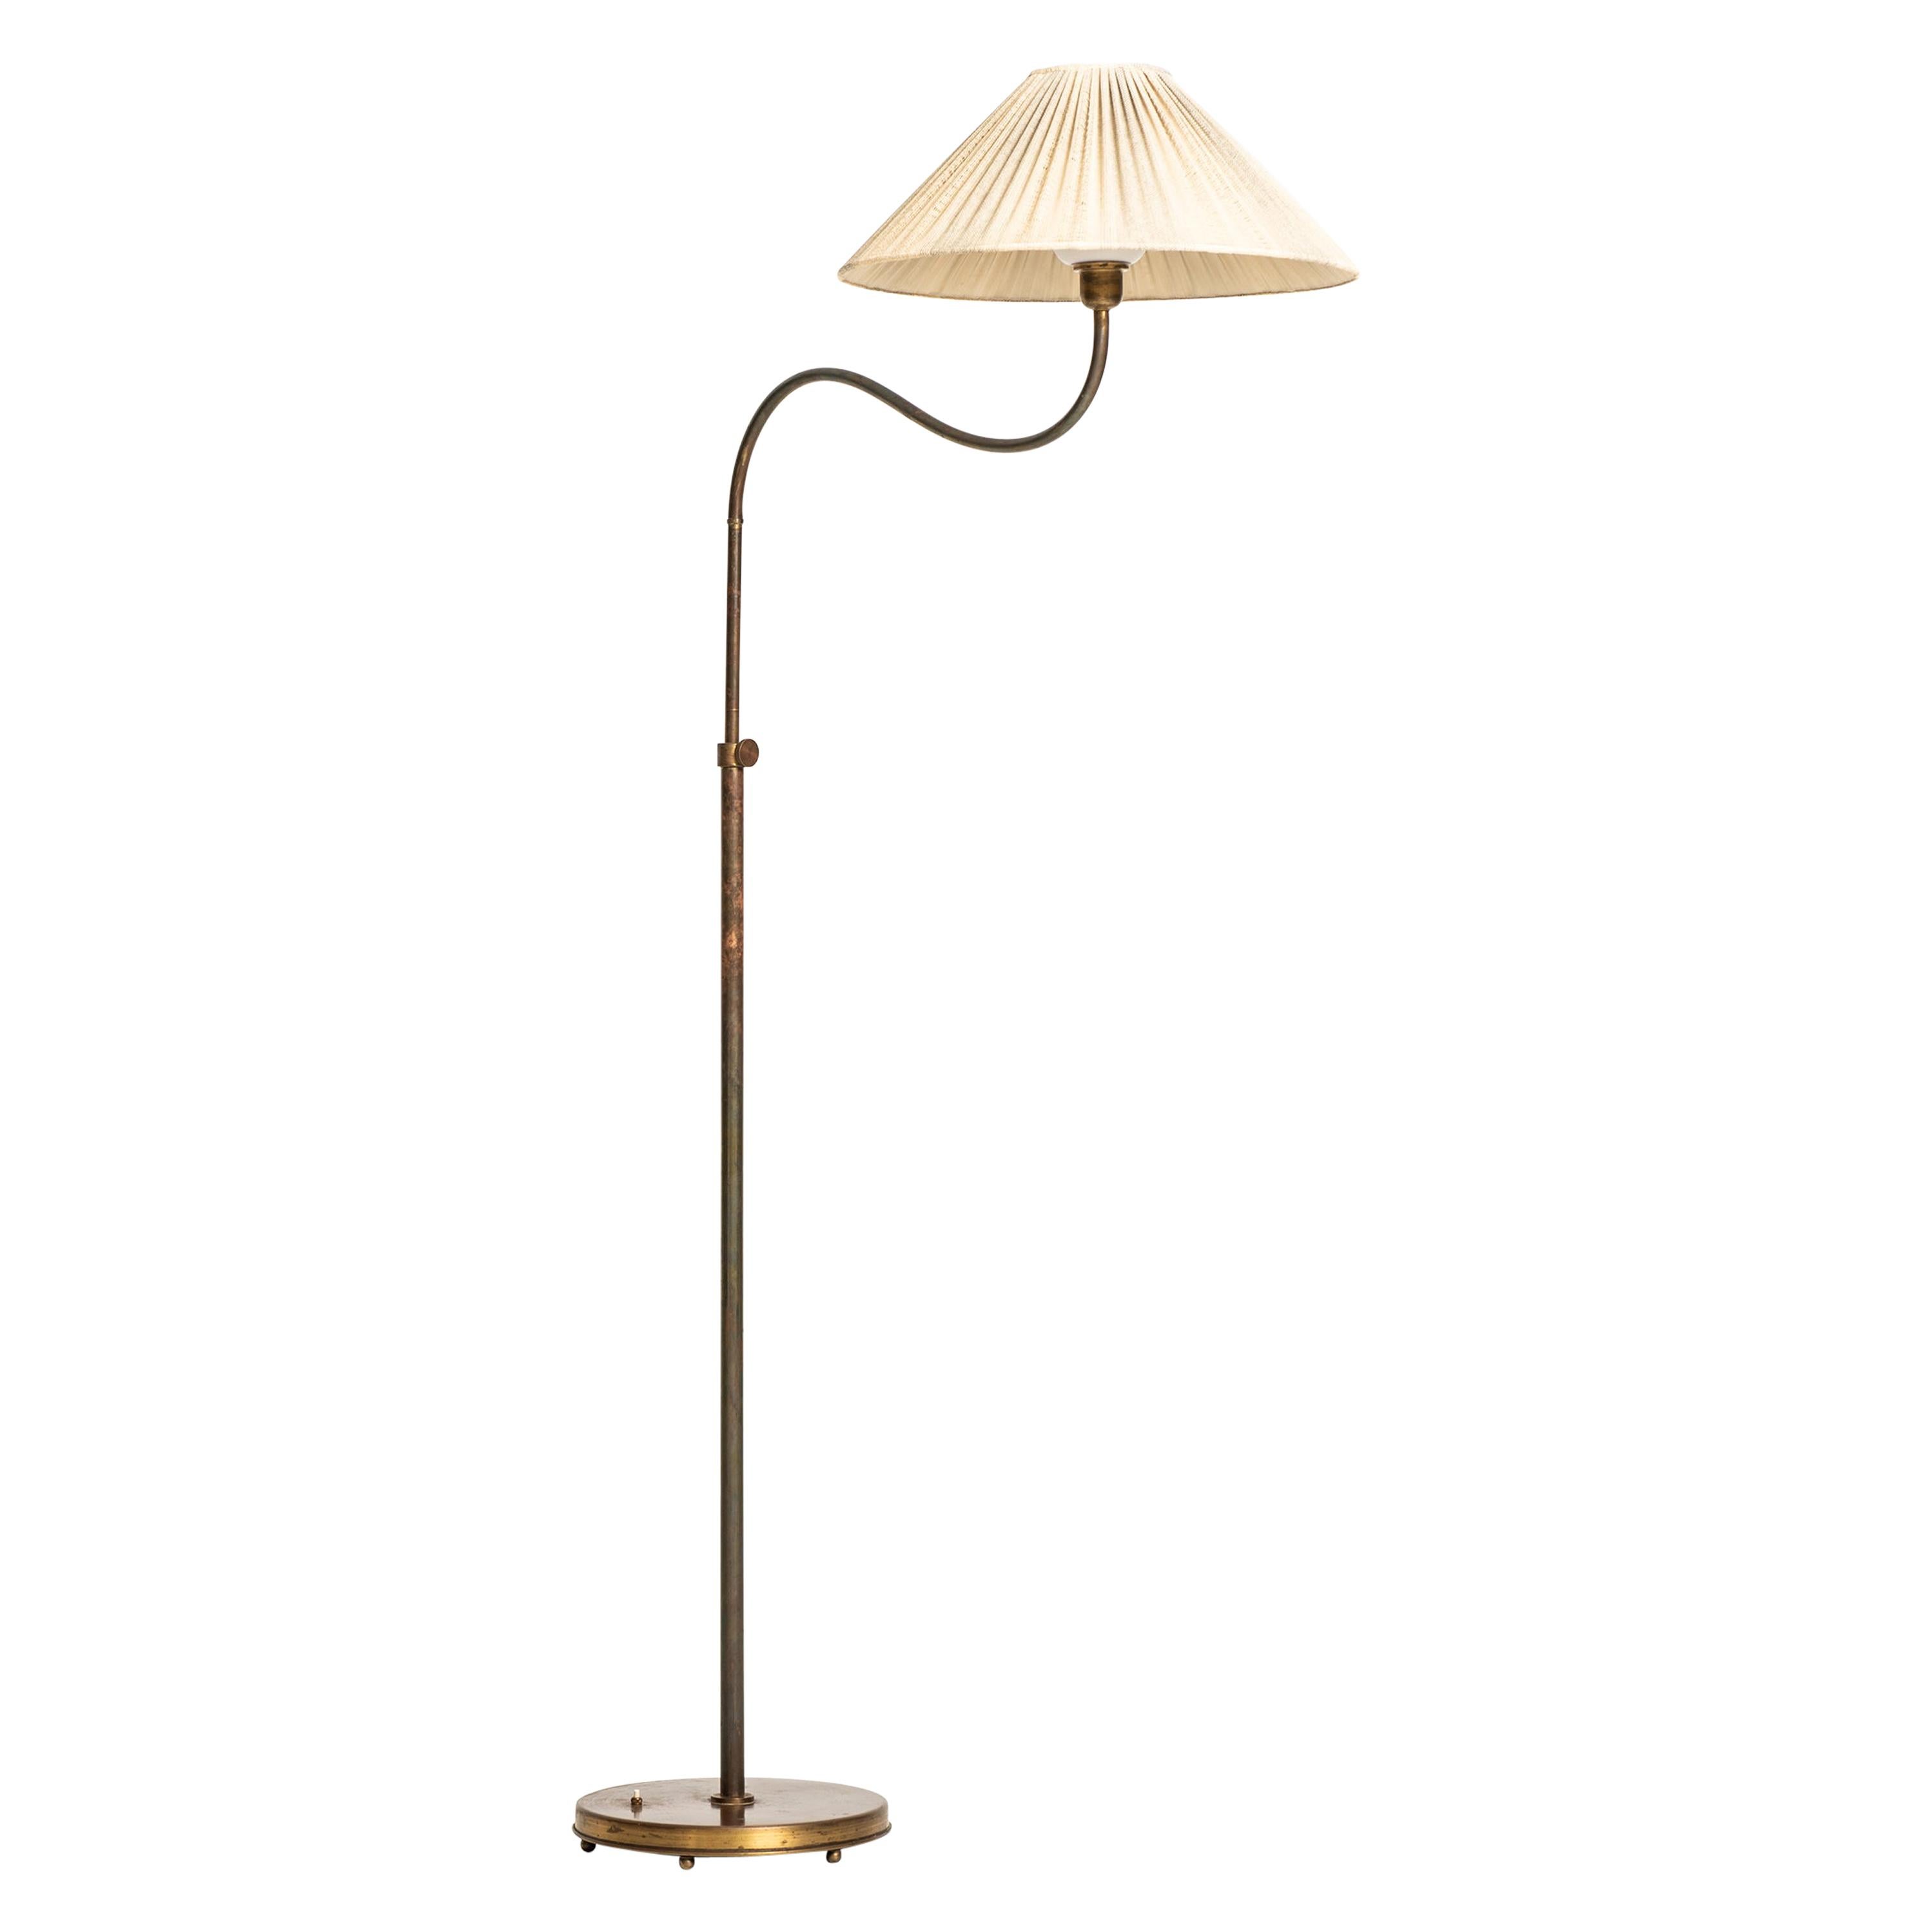 Josef Frank Early Floor Lamp Produced by Svenskt Tenn in Sweden